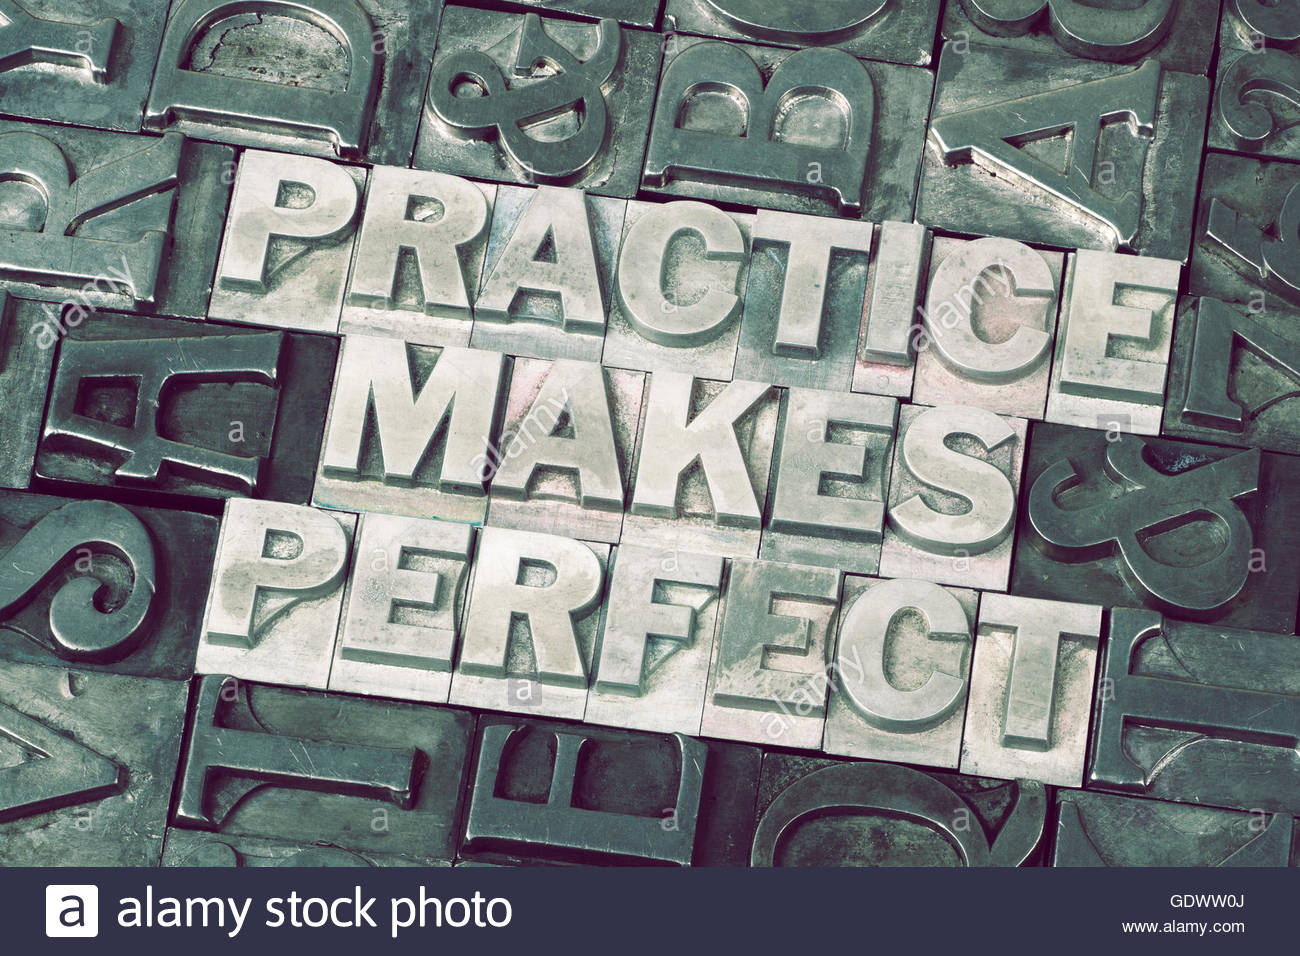 Practice Makes Perfect Stock Photos